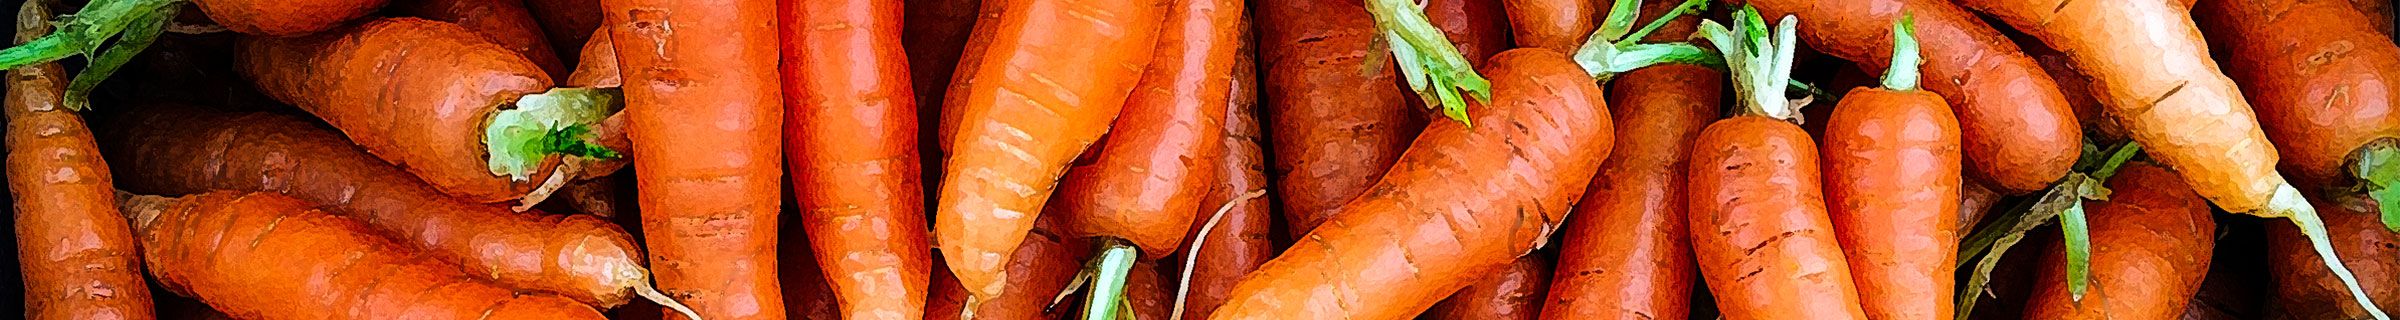 47th Avenue Farm CSA Carrots | Portland Oregon